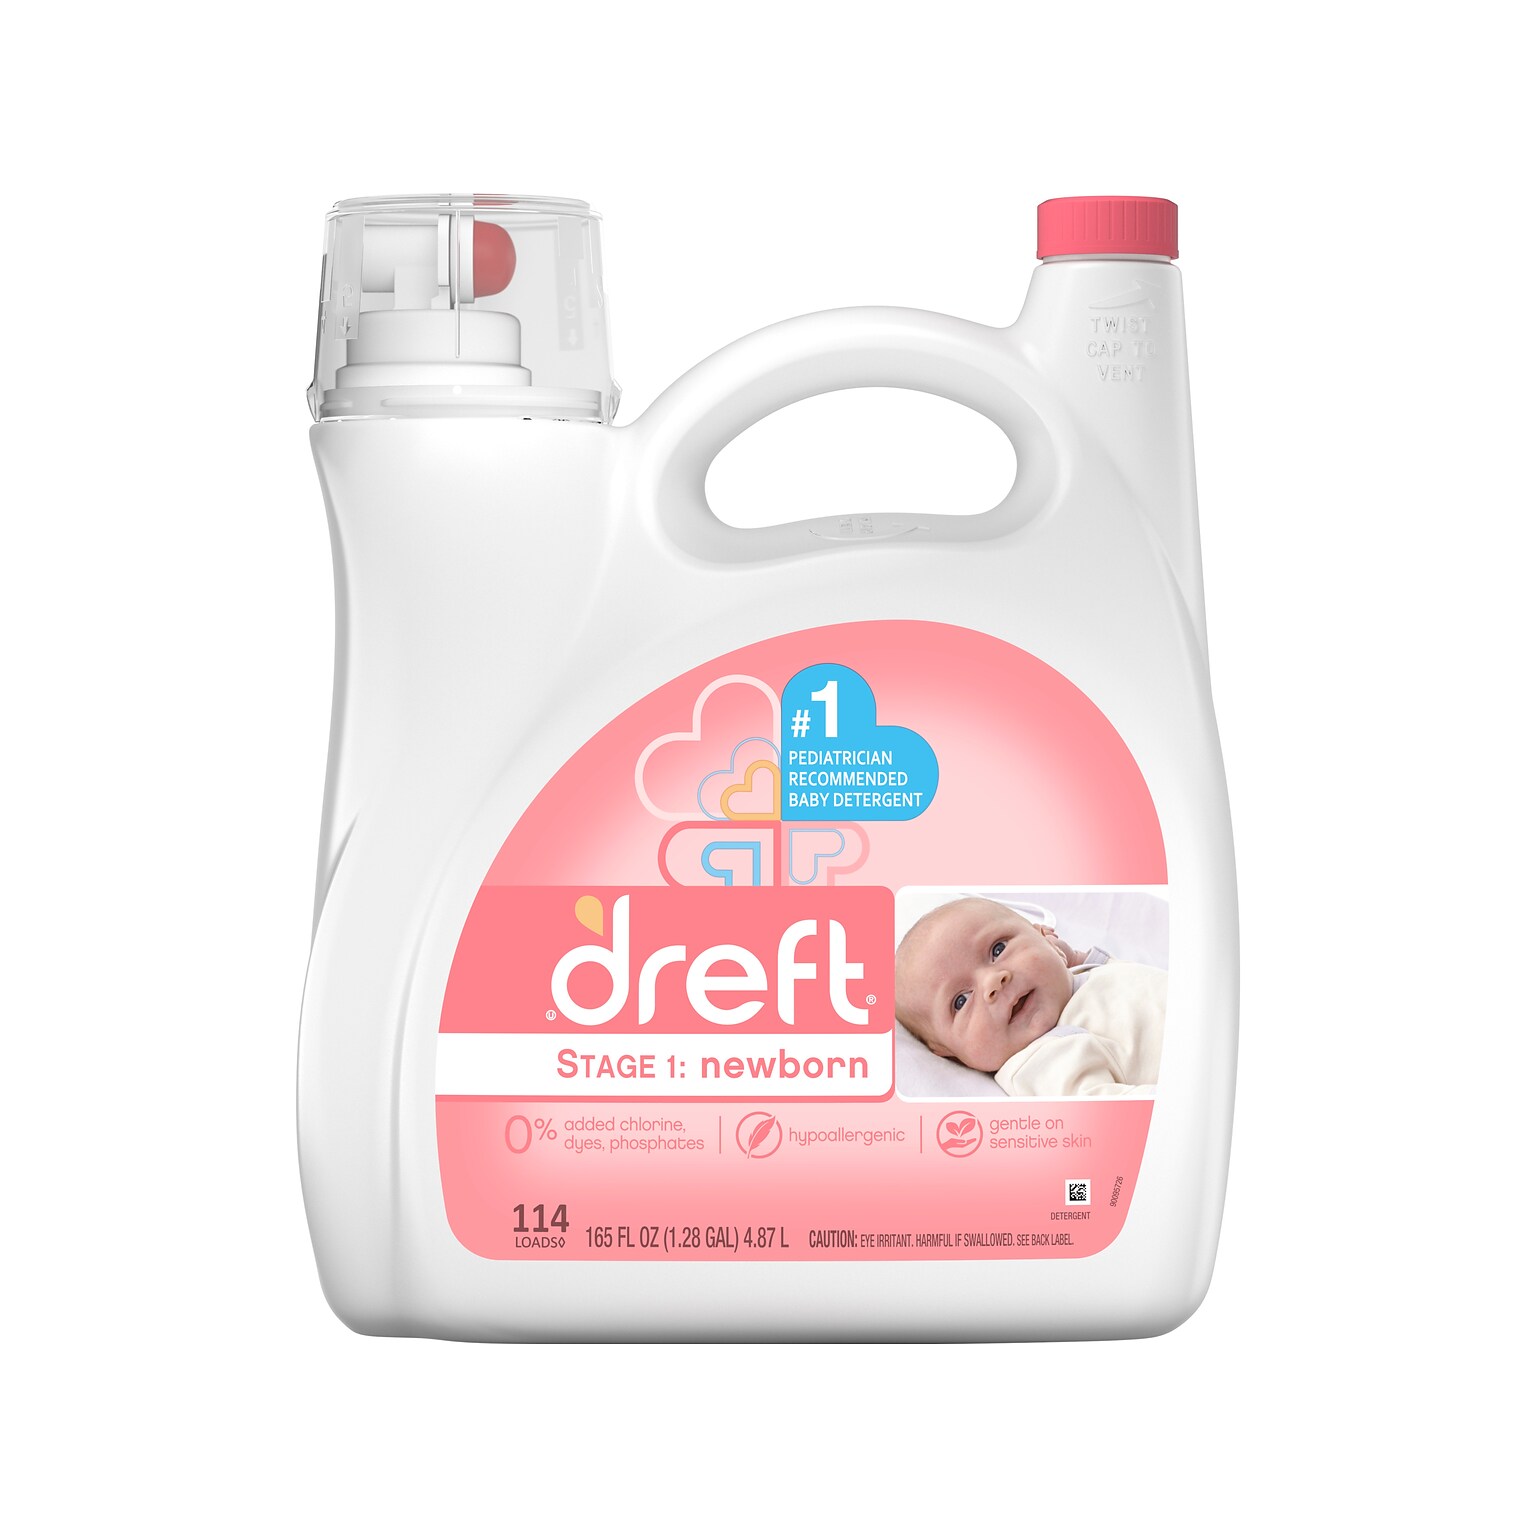 Dreft Stage 1: Newborn HE Liquid Laundry Detergent, 114 Loads, 165 oz. (03241)